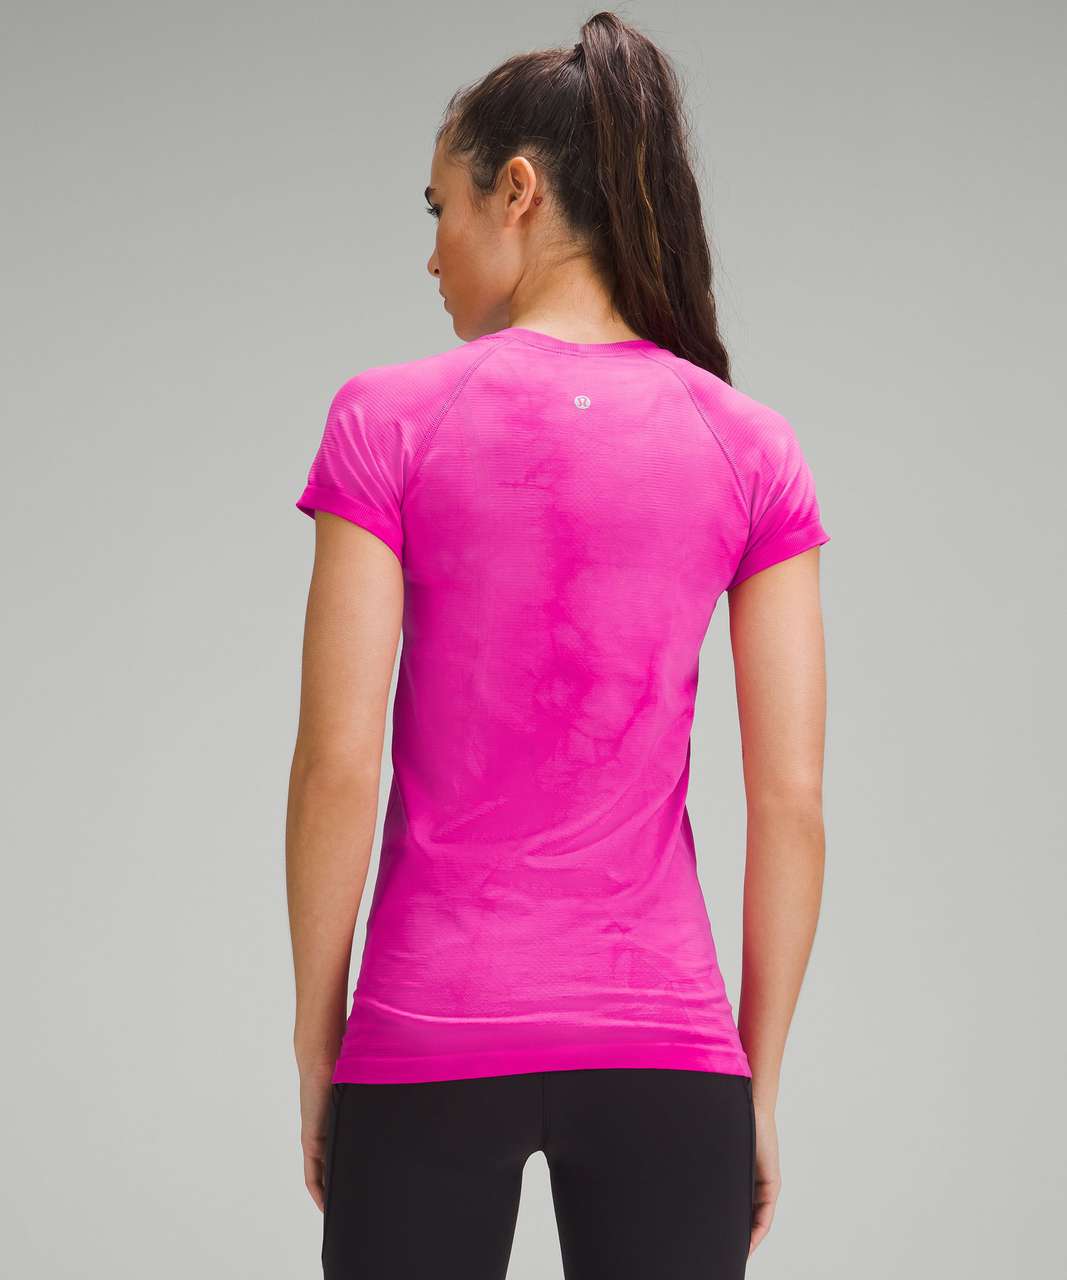 Lululemon Swiftly Tech Short-Sleeve Shirt 2.0 - Marble Dye Sonic Pink